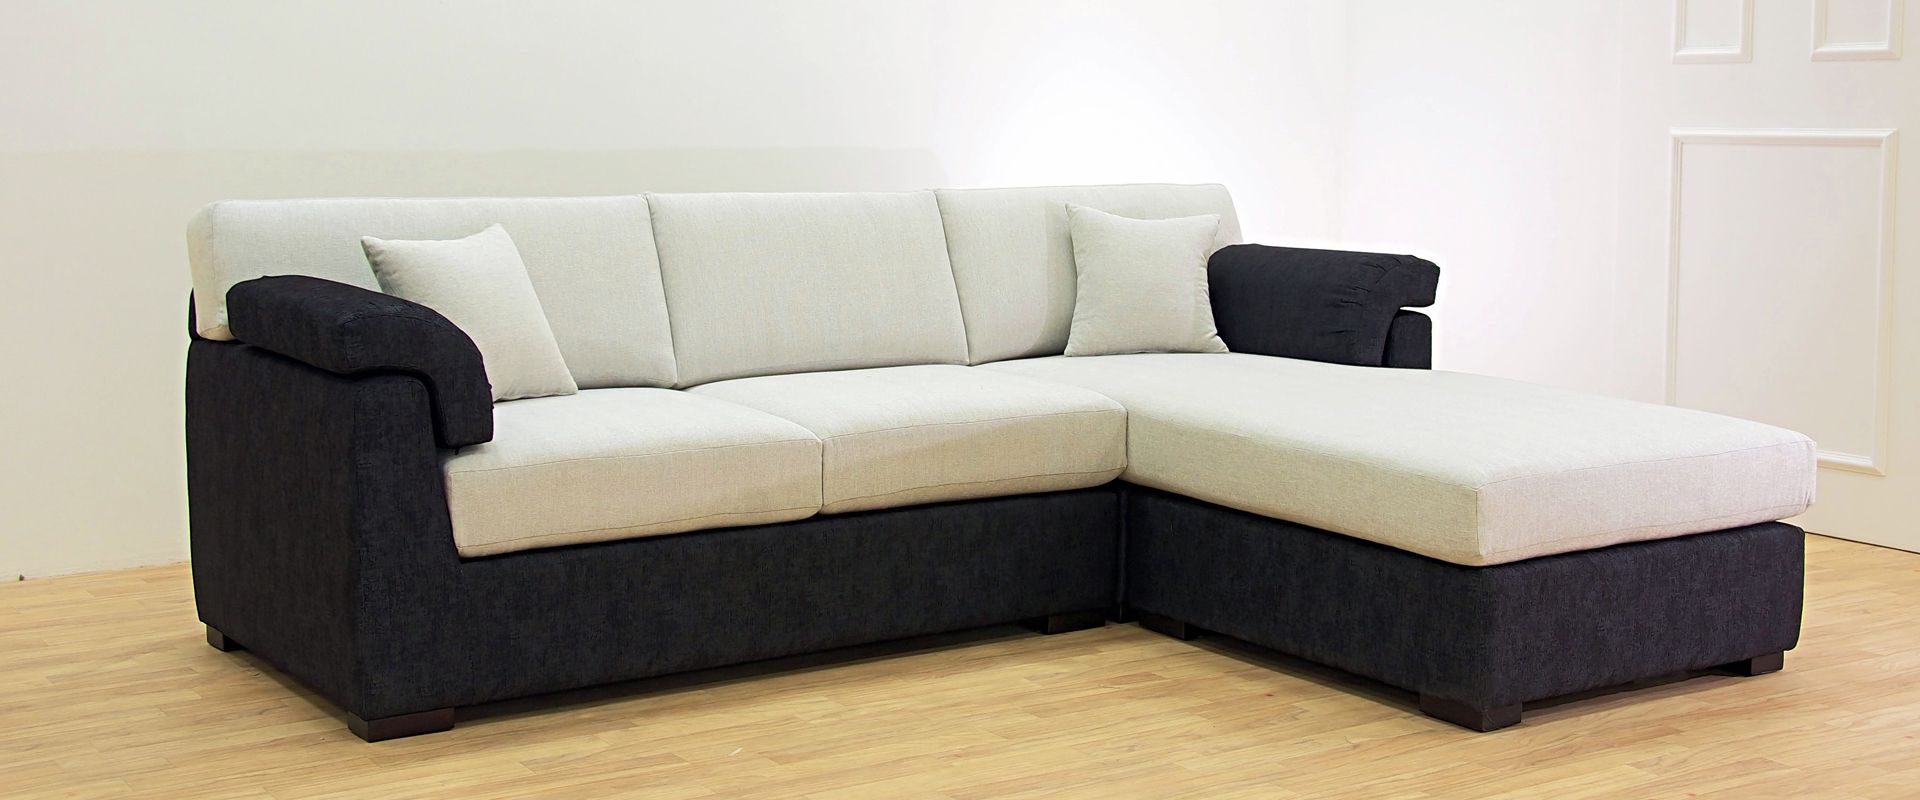 Comfortable sofas and seatings